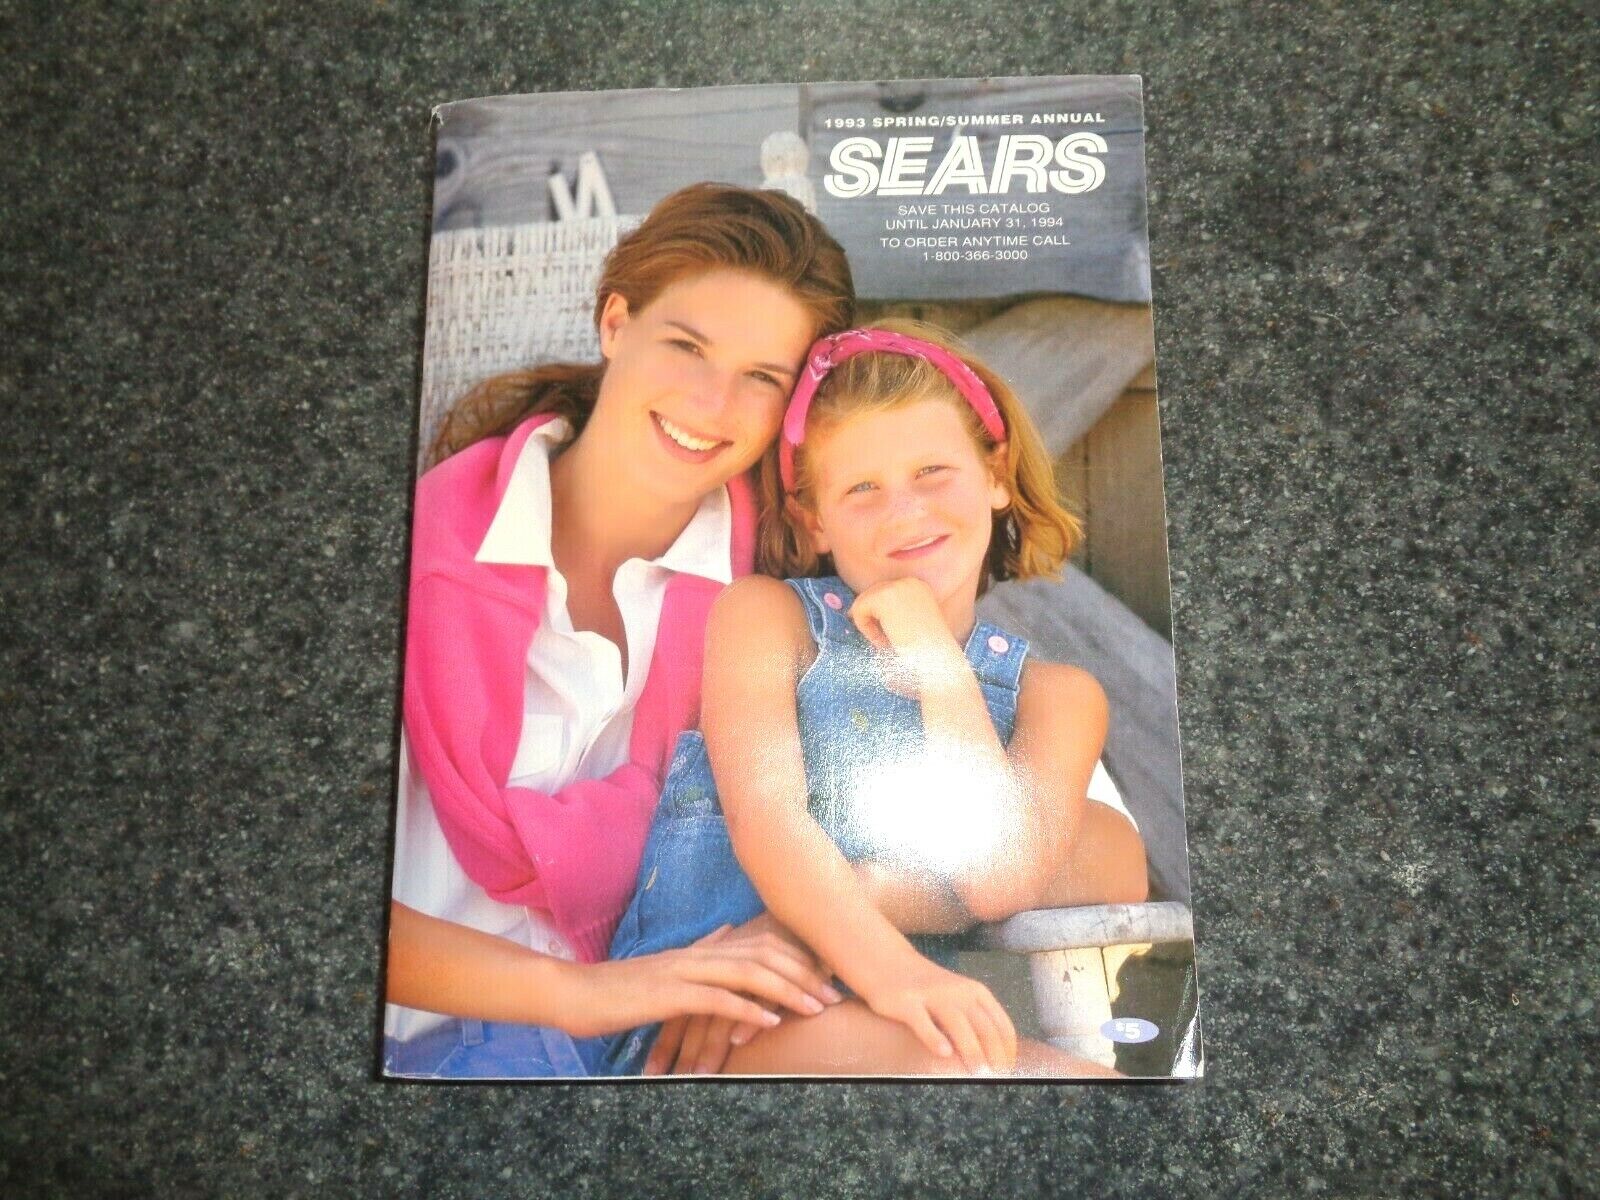 Sears 1993 Spring/Summer Annual Catalog